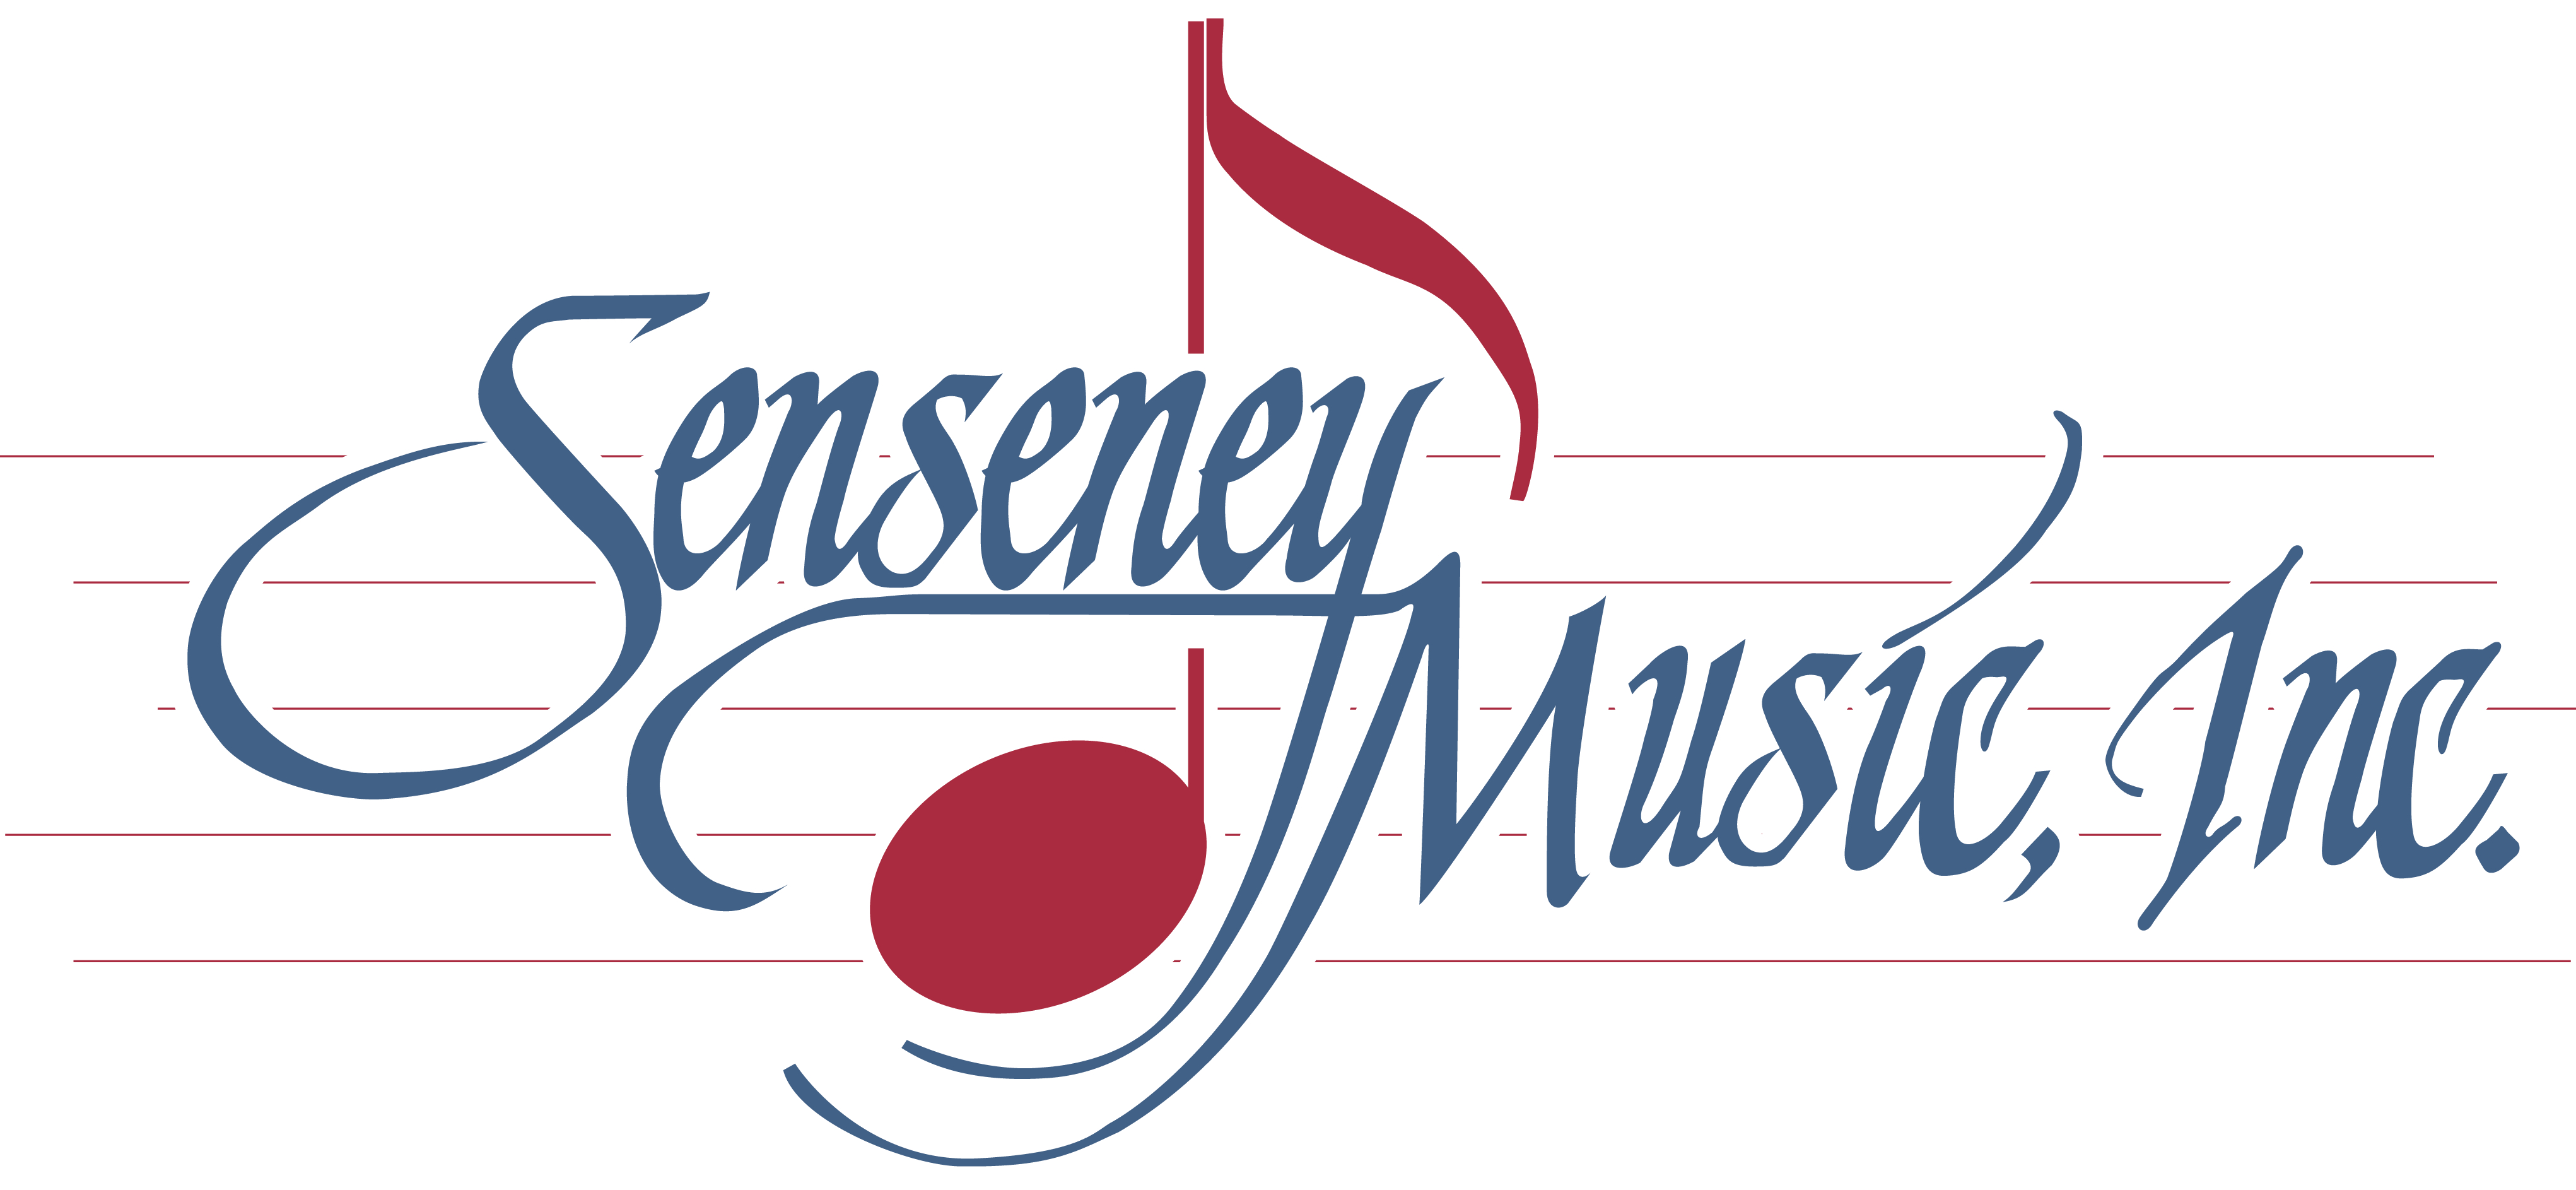 Senseney Music, Inc. logo